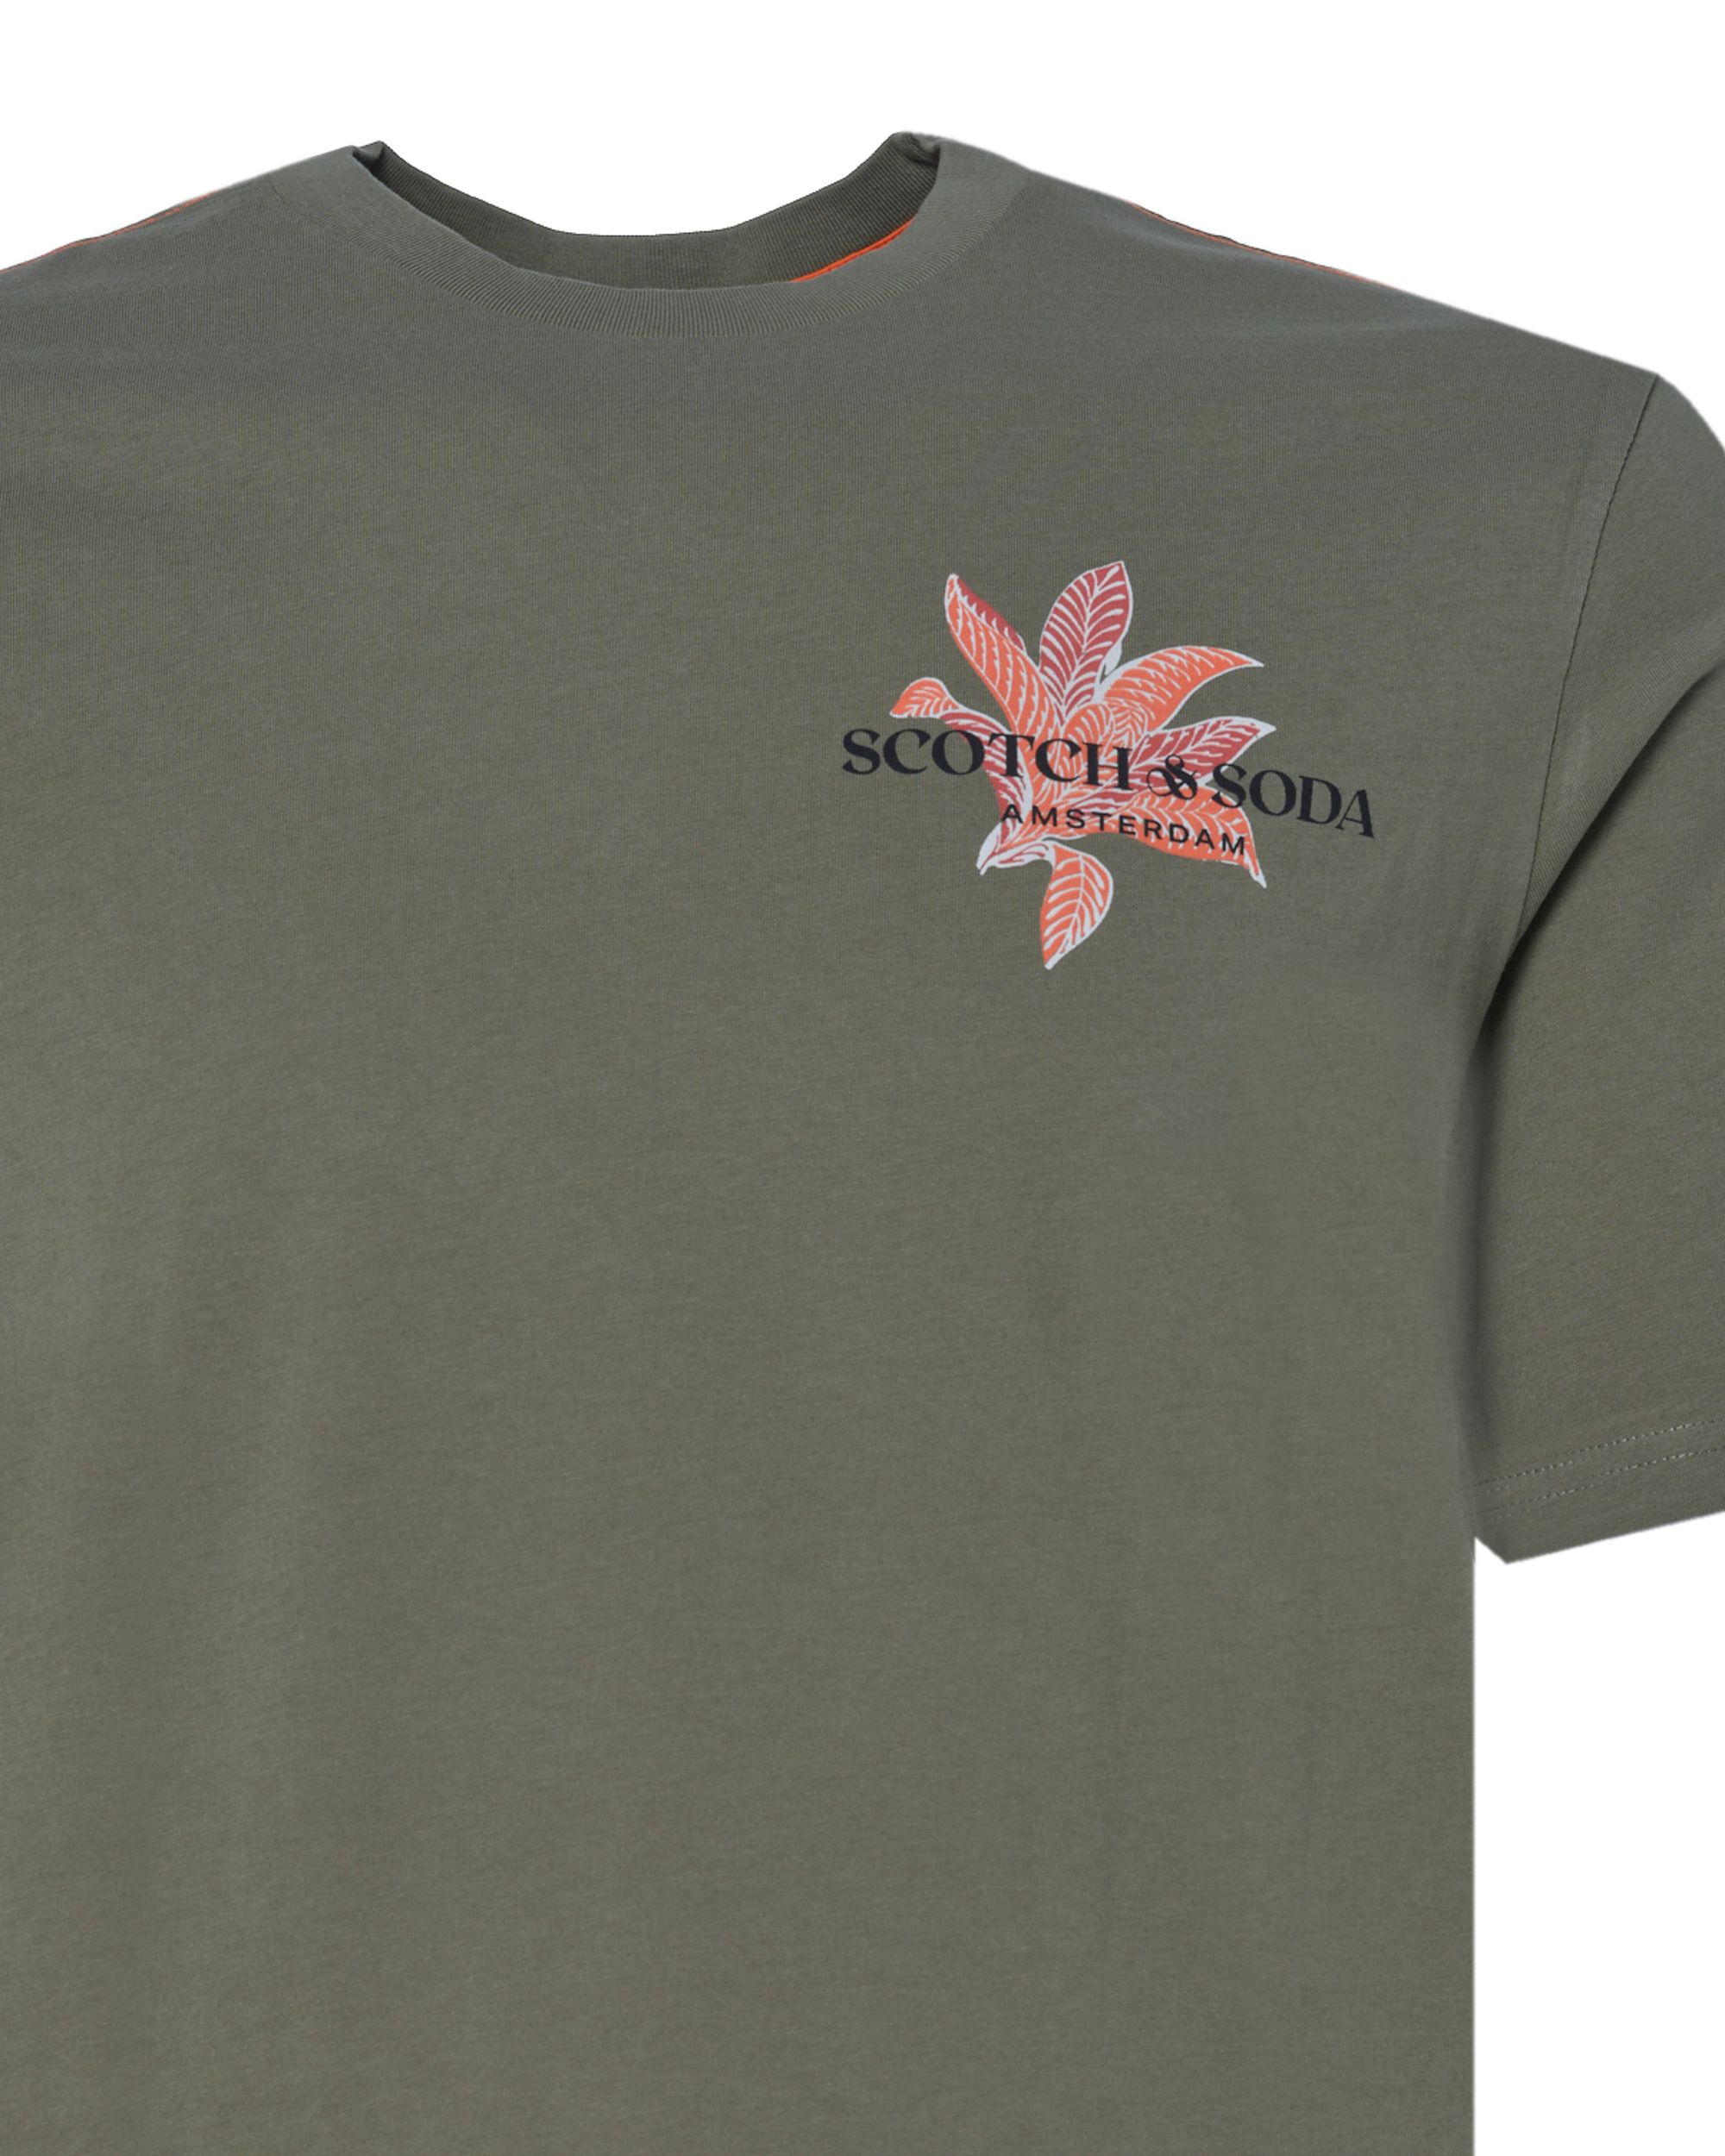 Scotch & Soda T-shirt KM Groen 080199-001-L